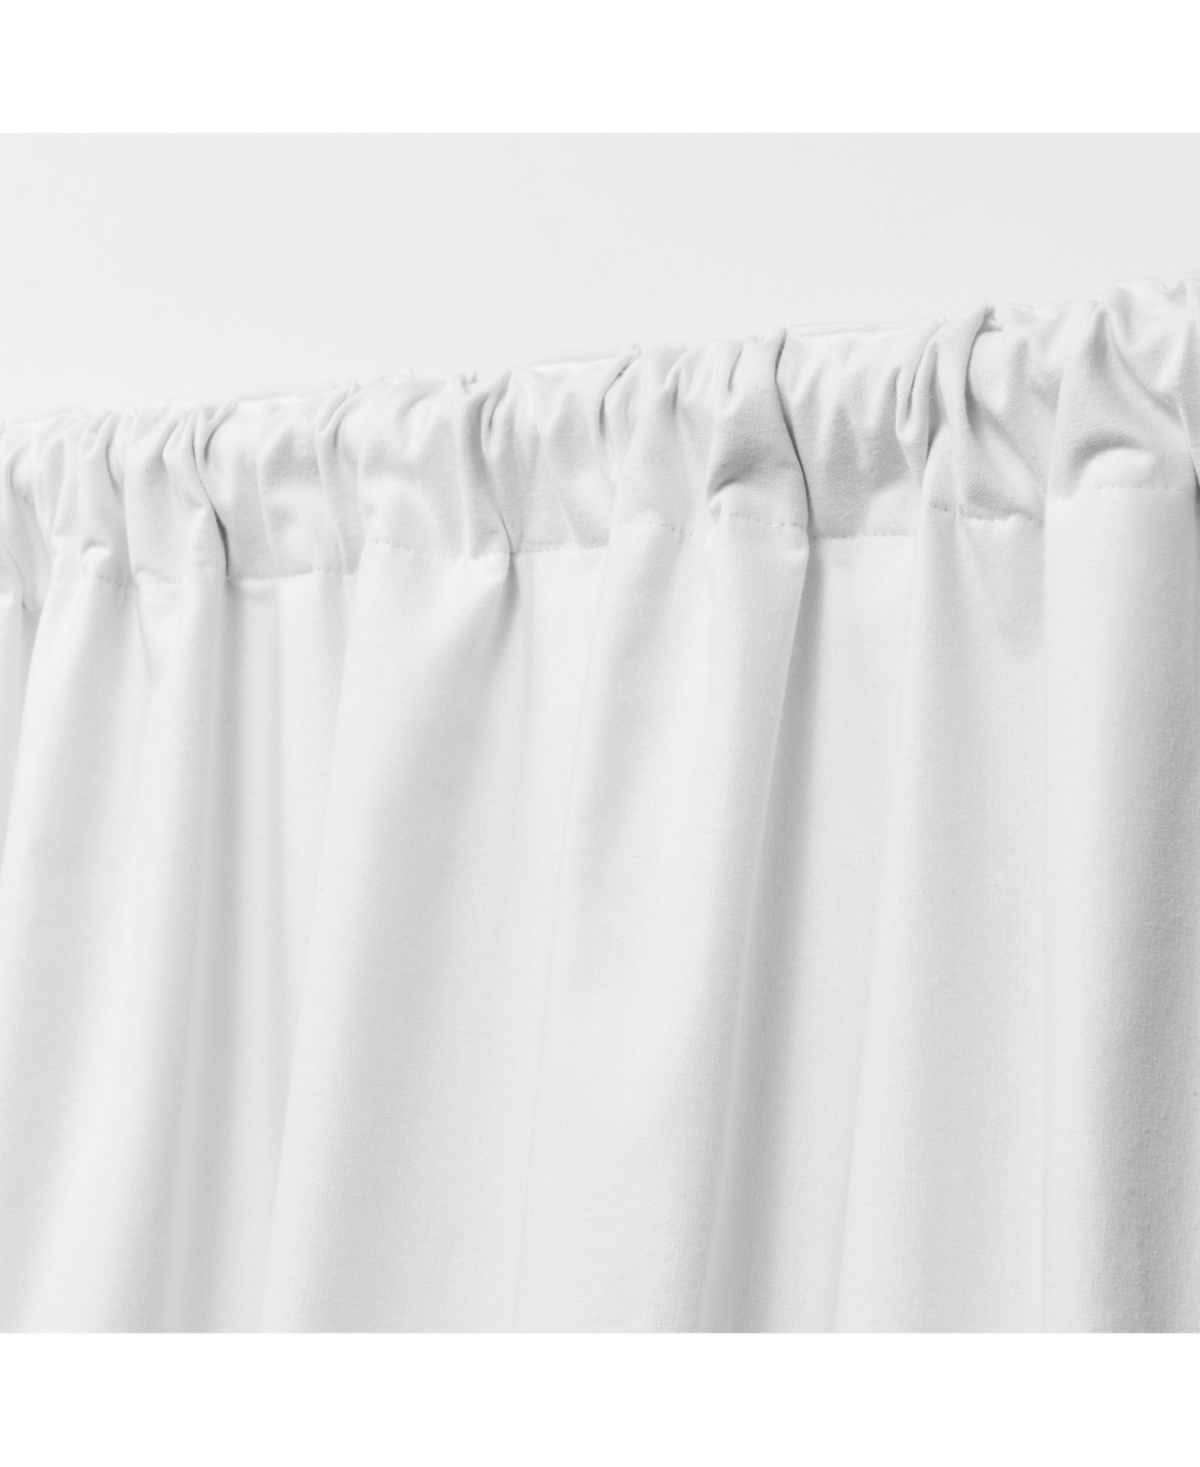 Shop Lauren Ralph Lauren Waller Blackout Solid Back Tab Rod Pocket Curtain Panel, 52" X 96" In Navy